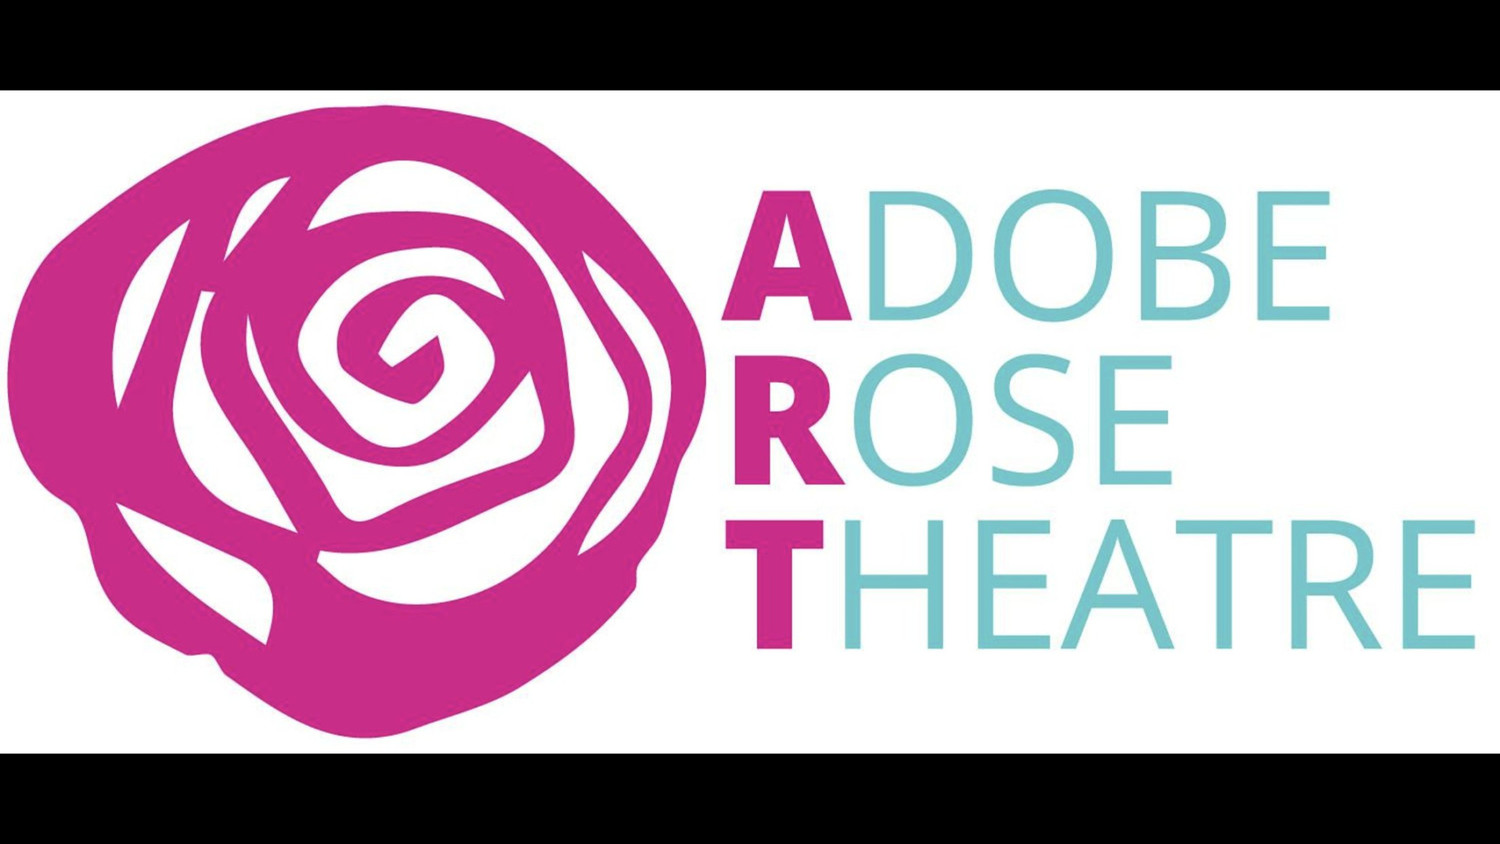 The Adobe Rose Theatre Announces Grassroots Pledge Drive 